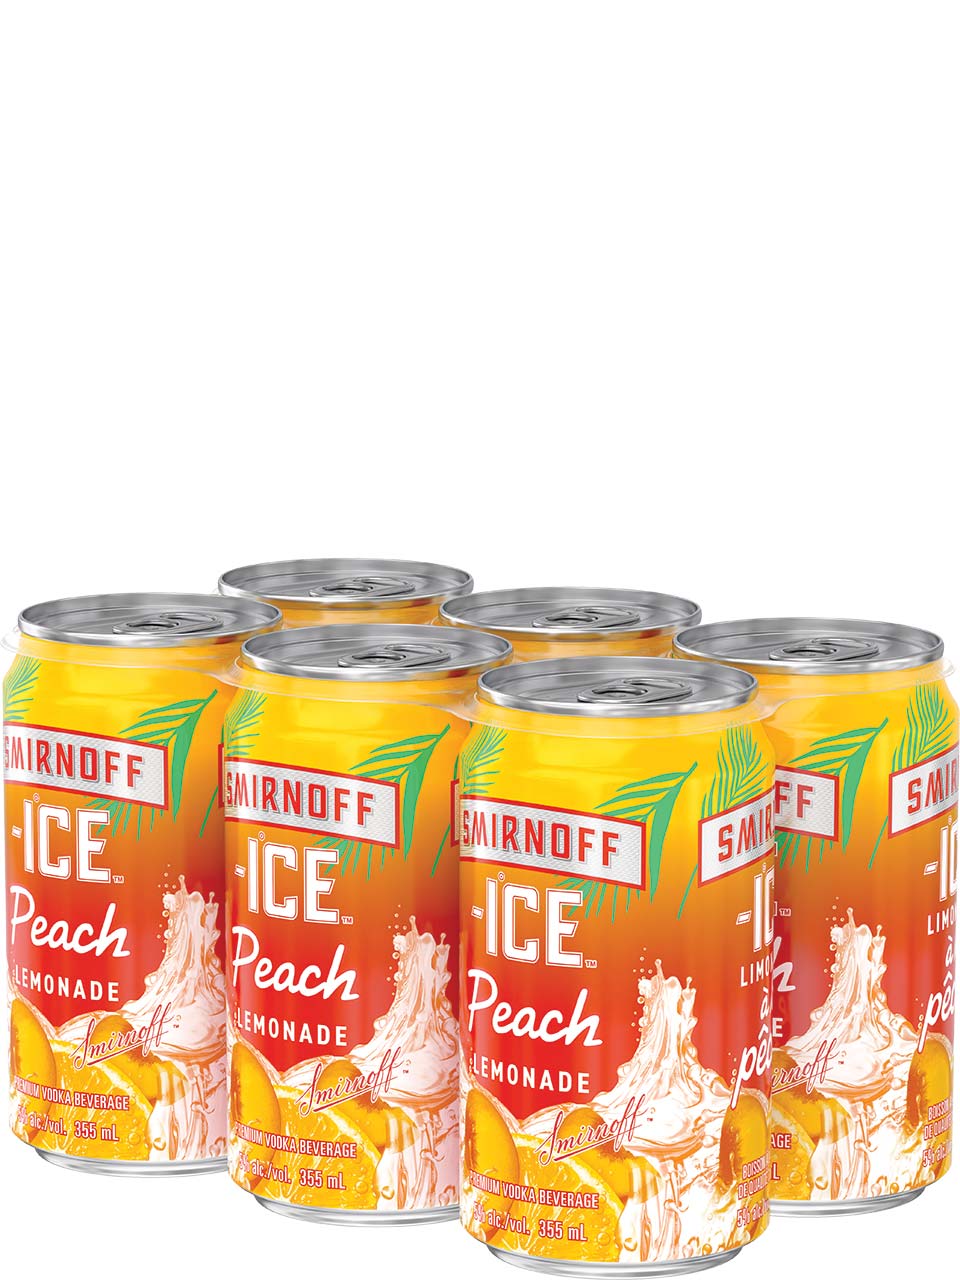 Smirnoff Ice Peach Lemonade 6 Pack Cans